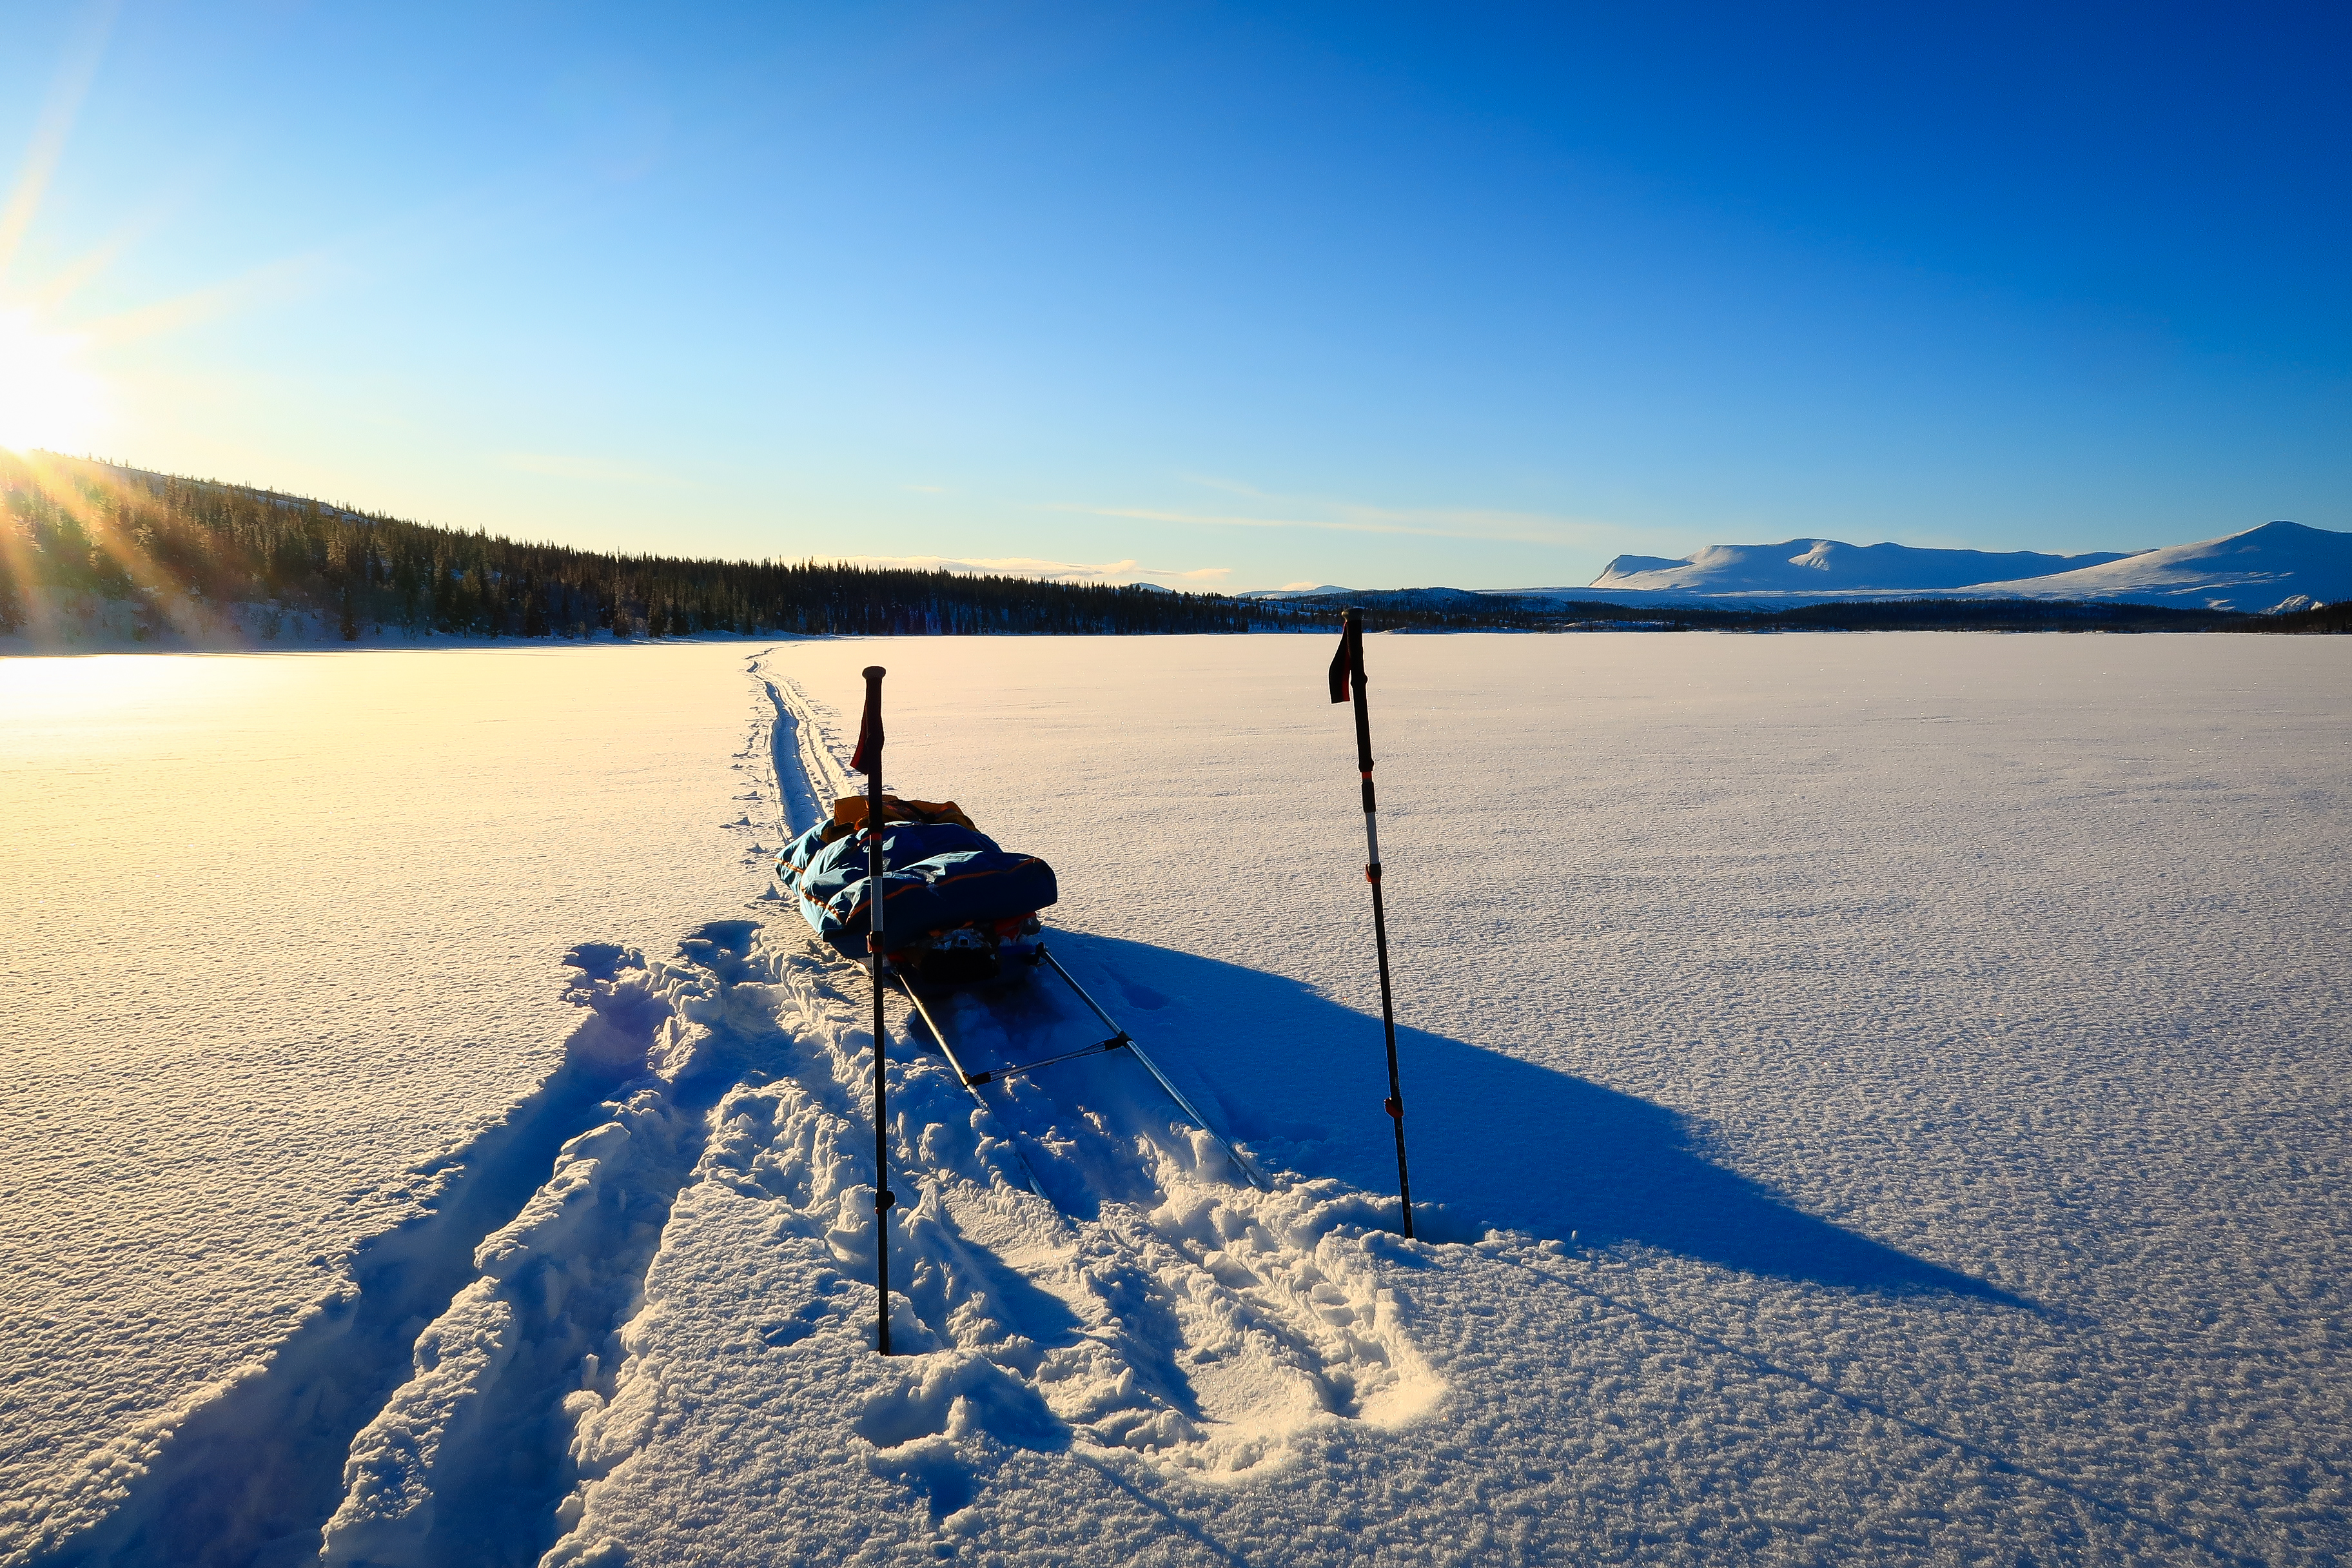 Making fresh tracks across a frozen lake